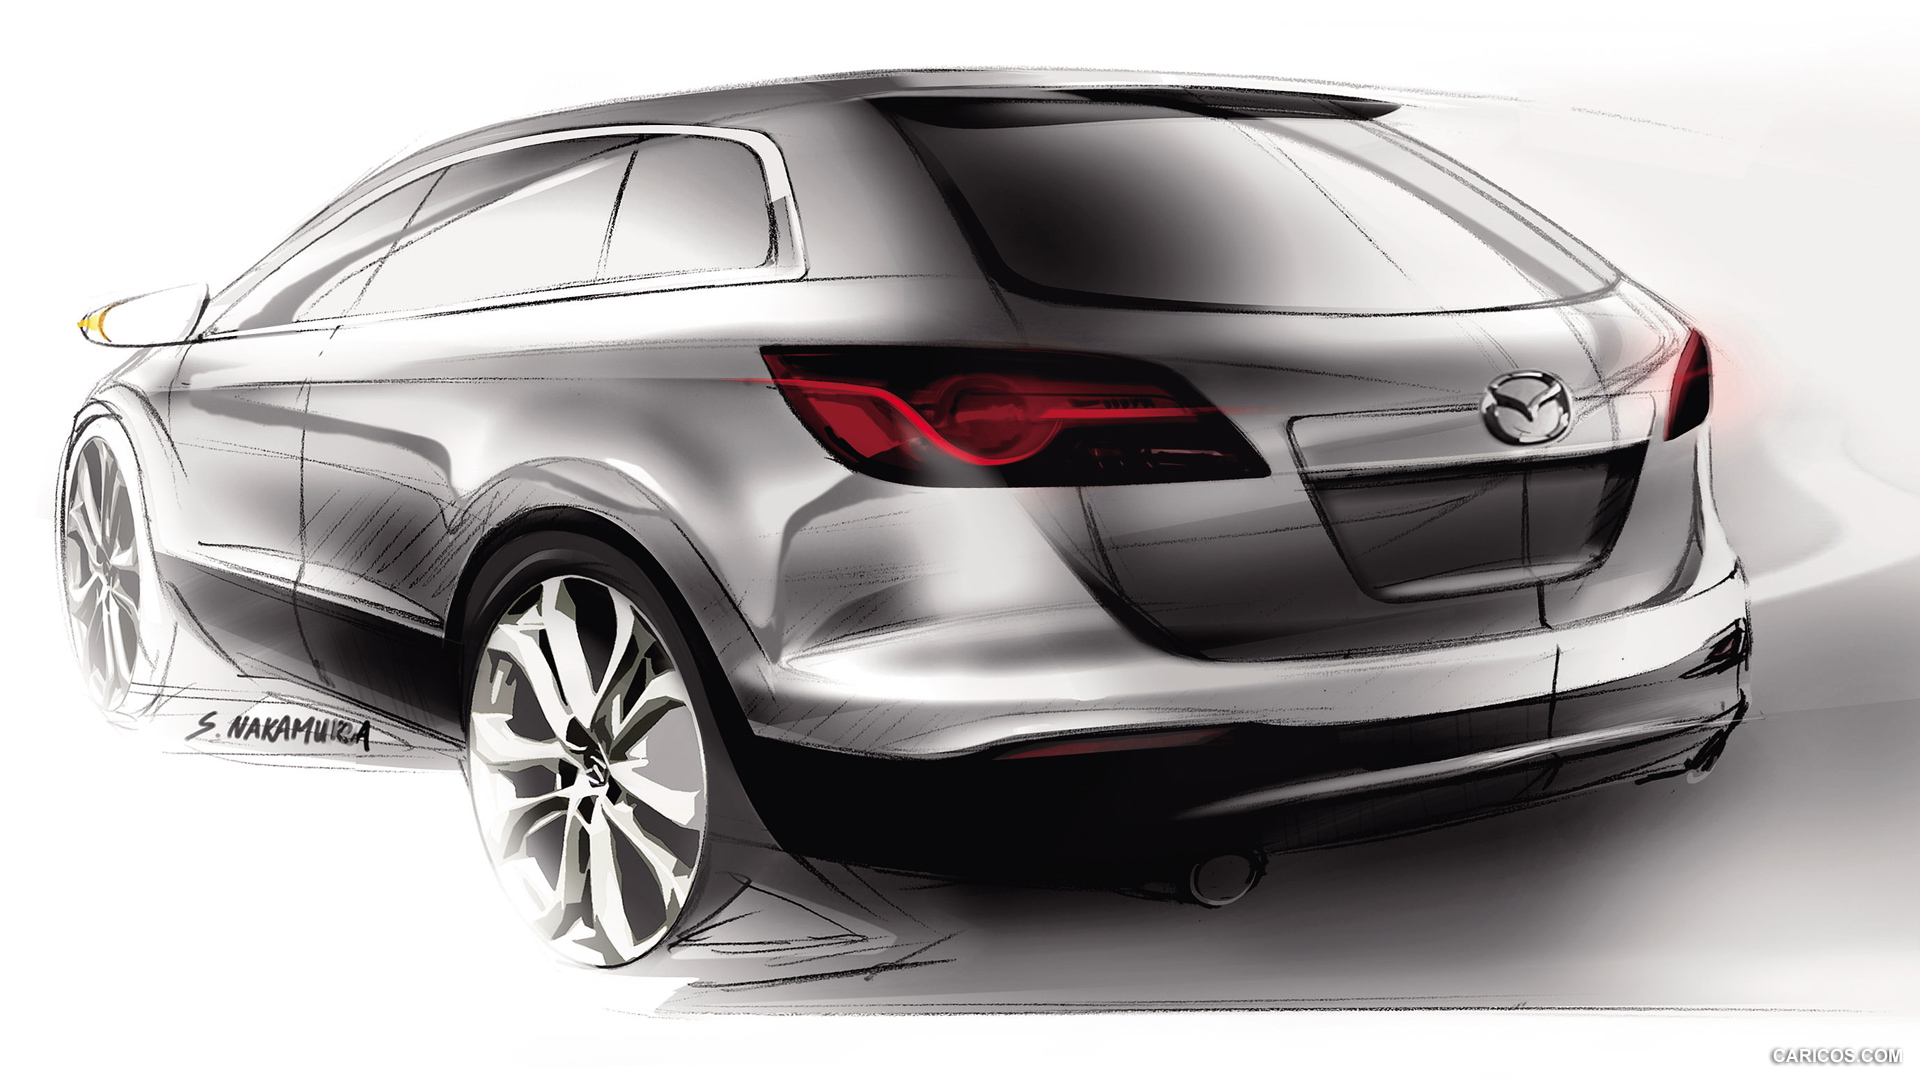 2013 Mazda CX-9  - Design Sketch, #16 of 17